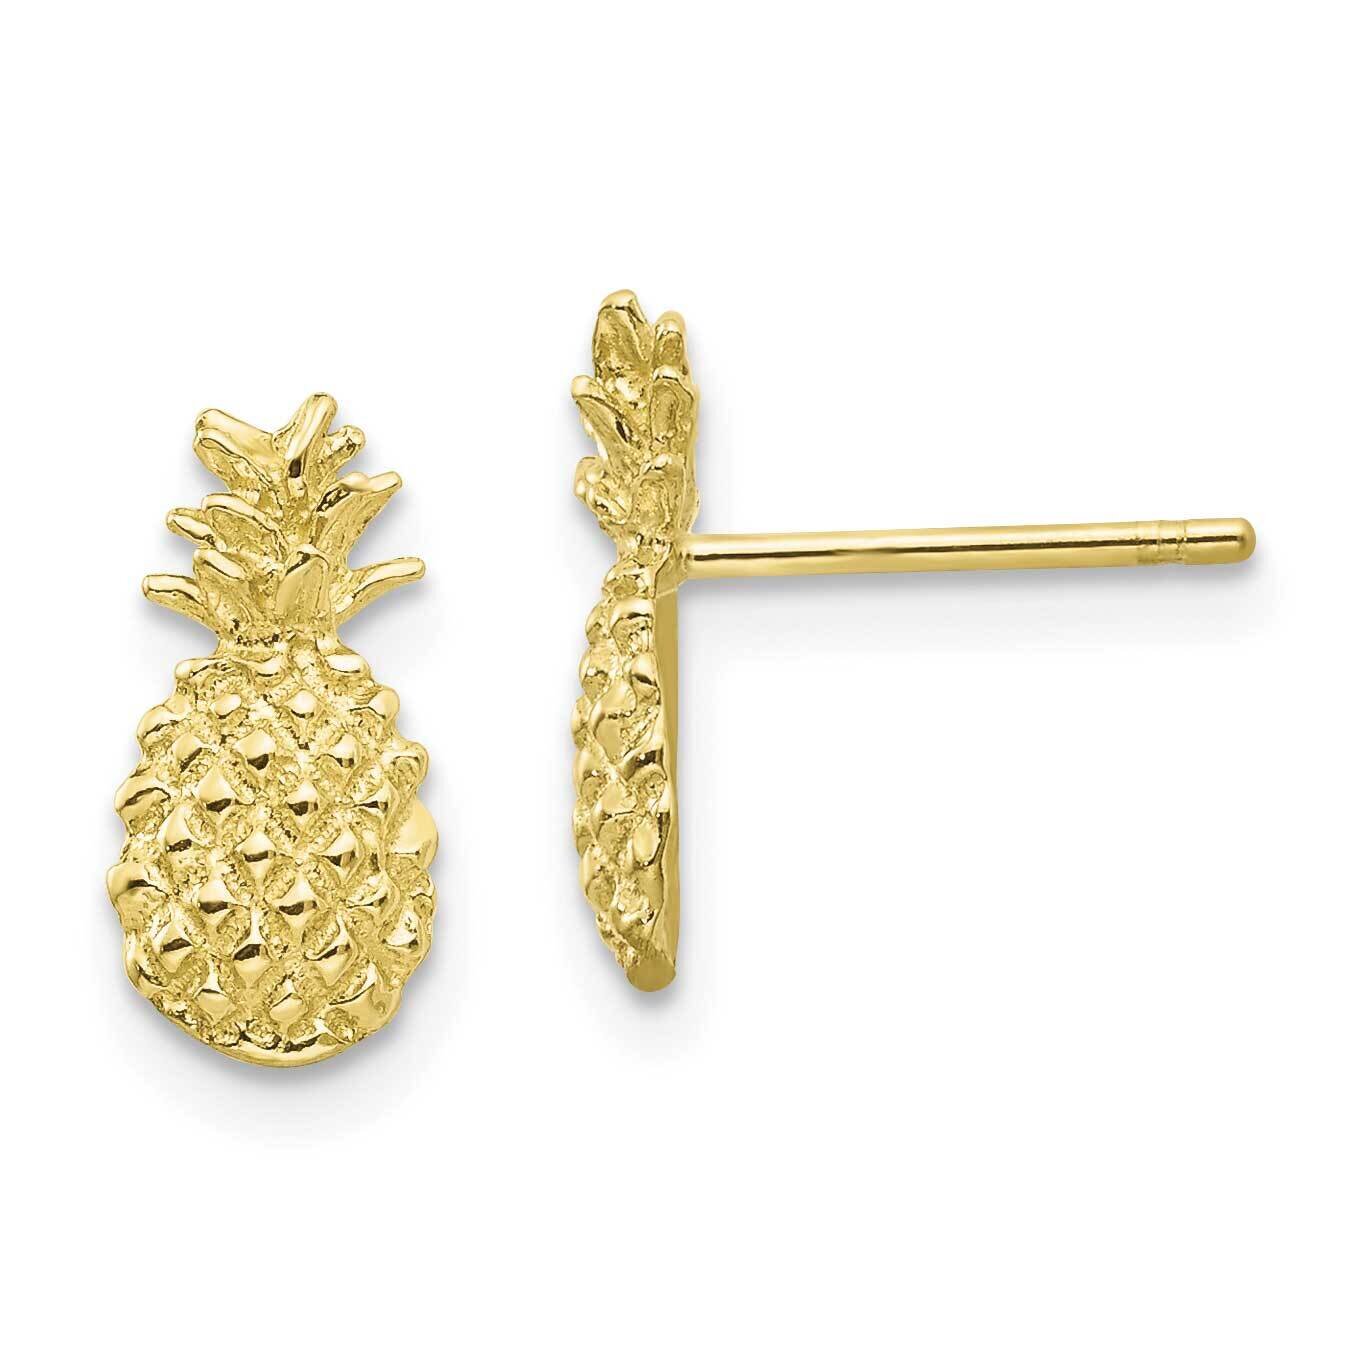 Textured Pineapple Post Earrings 10k Gold Polished 10TM773